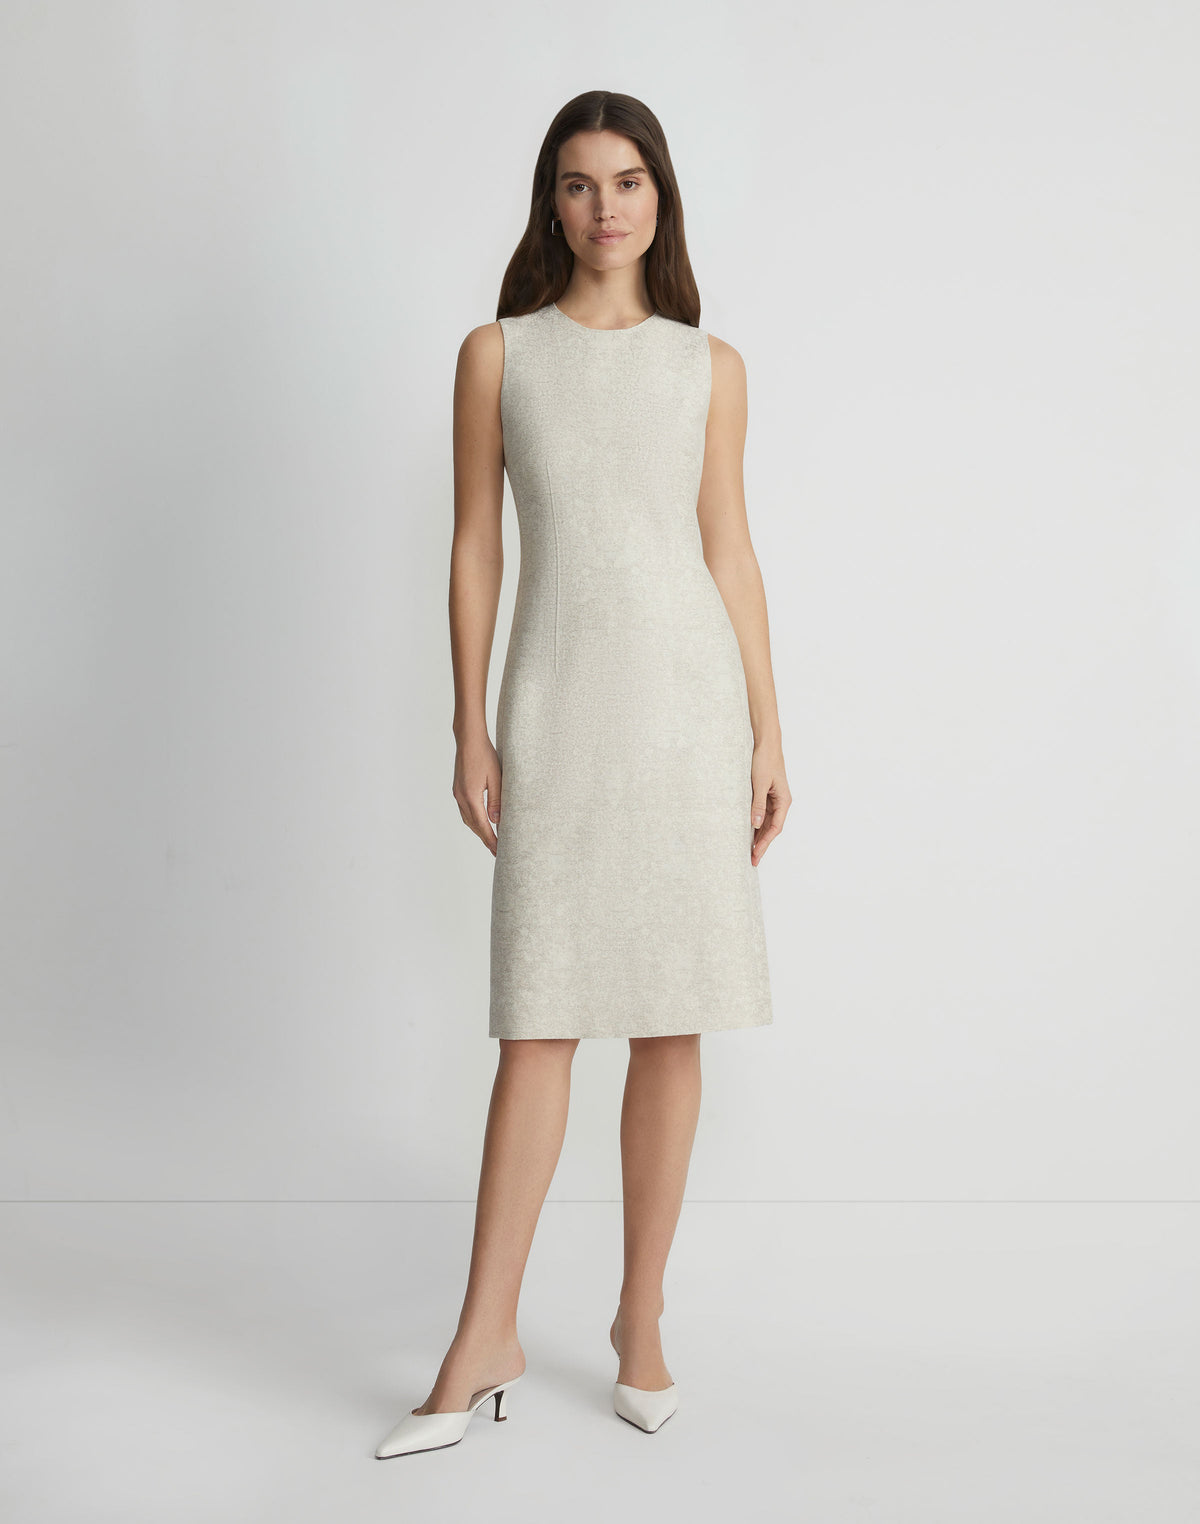 Textured Jacquard Cotton-Linen Sheath Dress